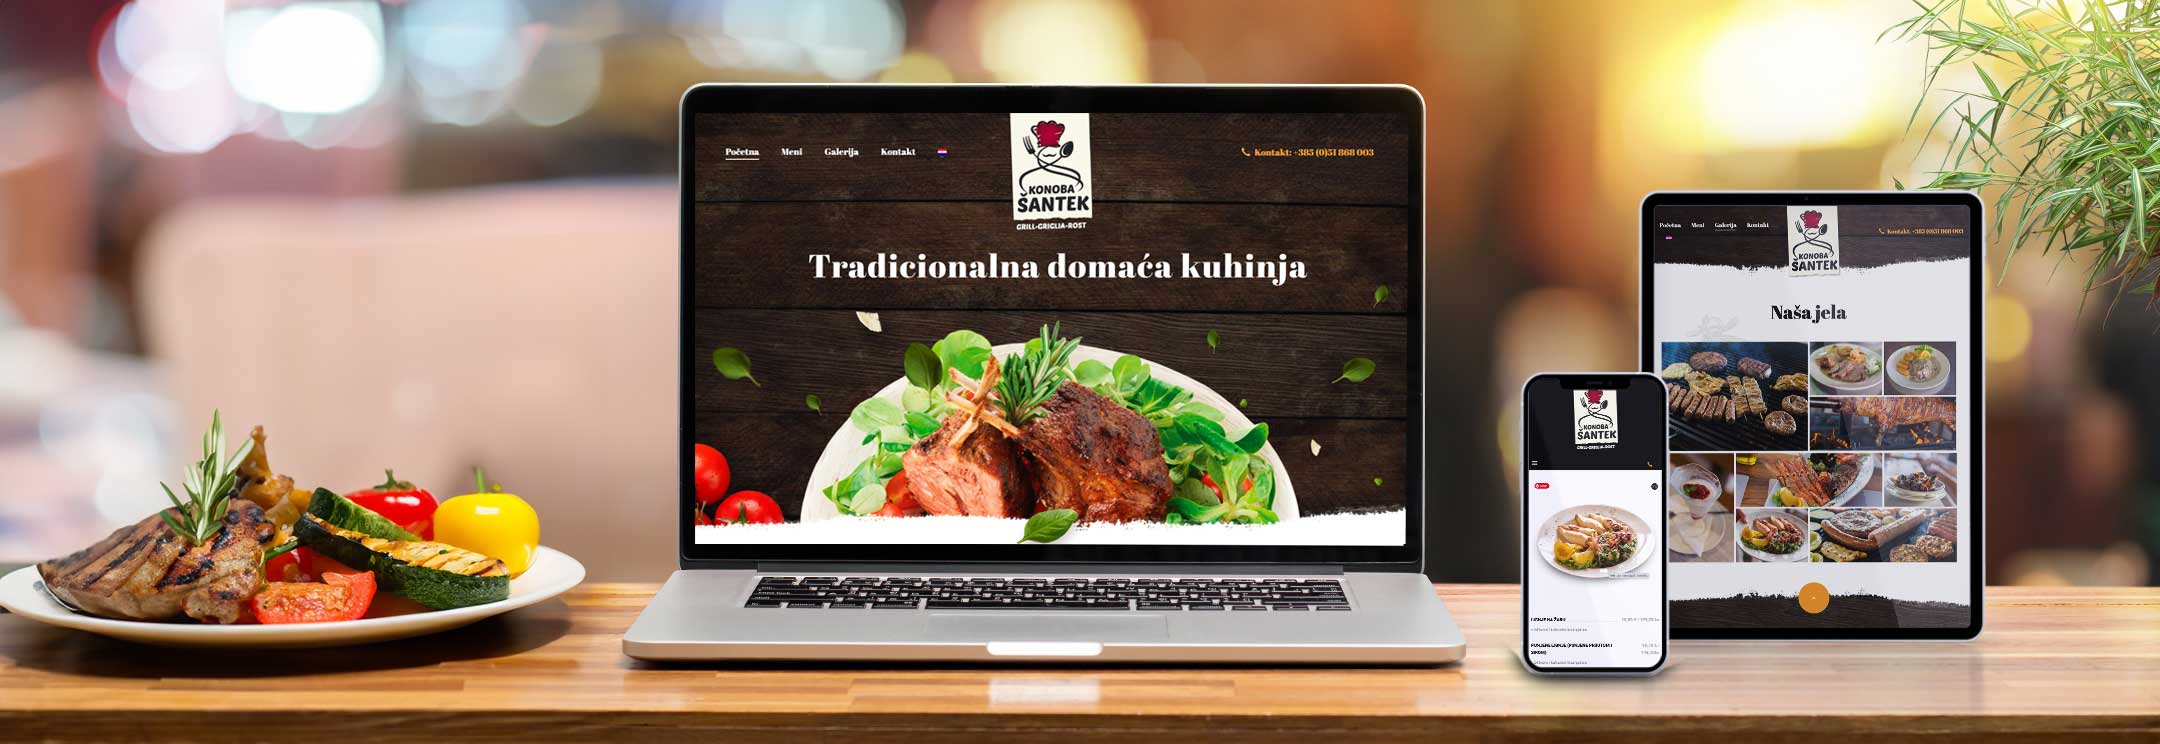 konoba santek restaurant dizajn stranica web design